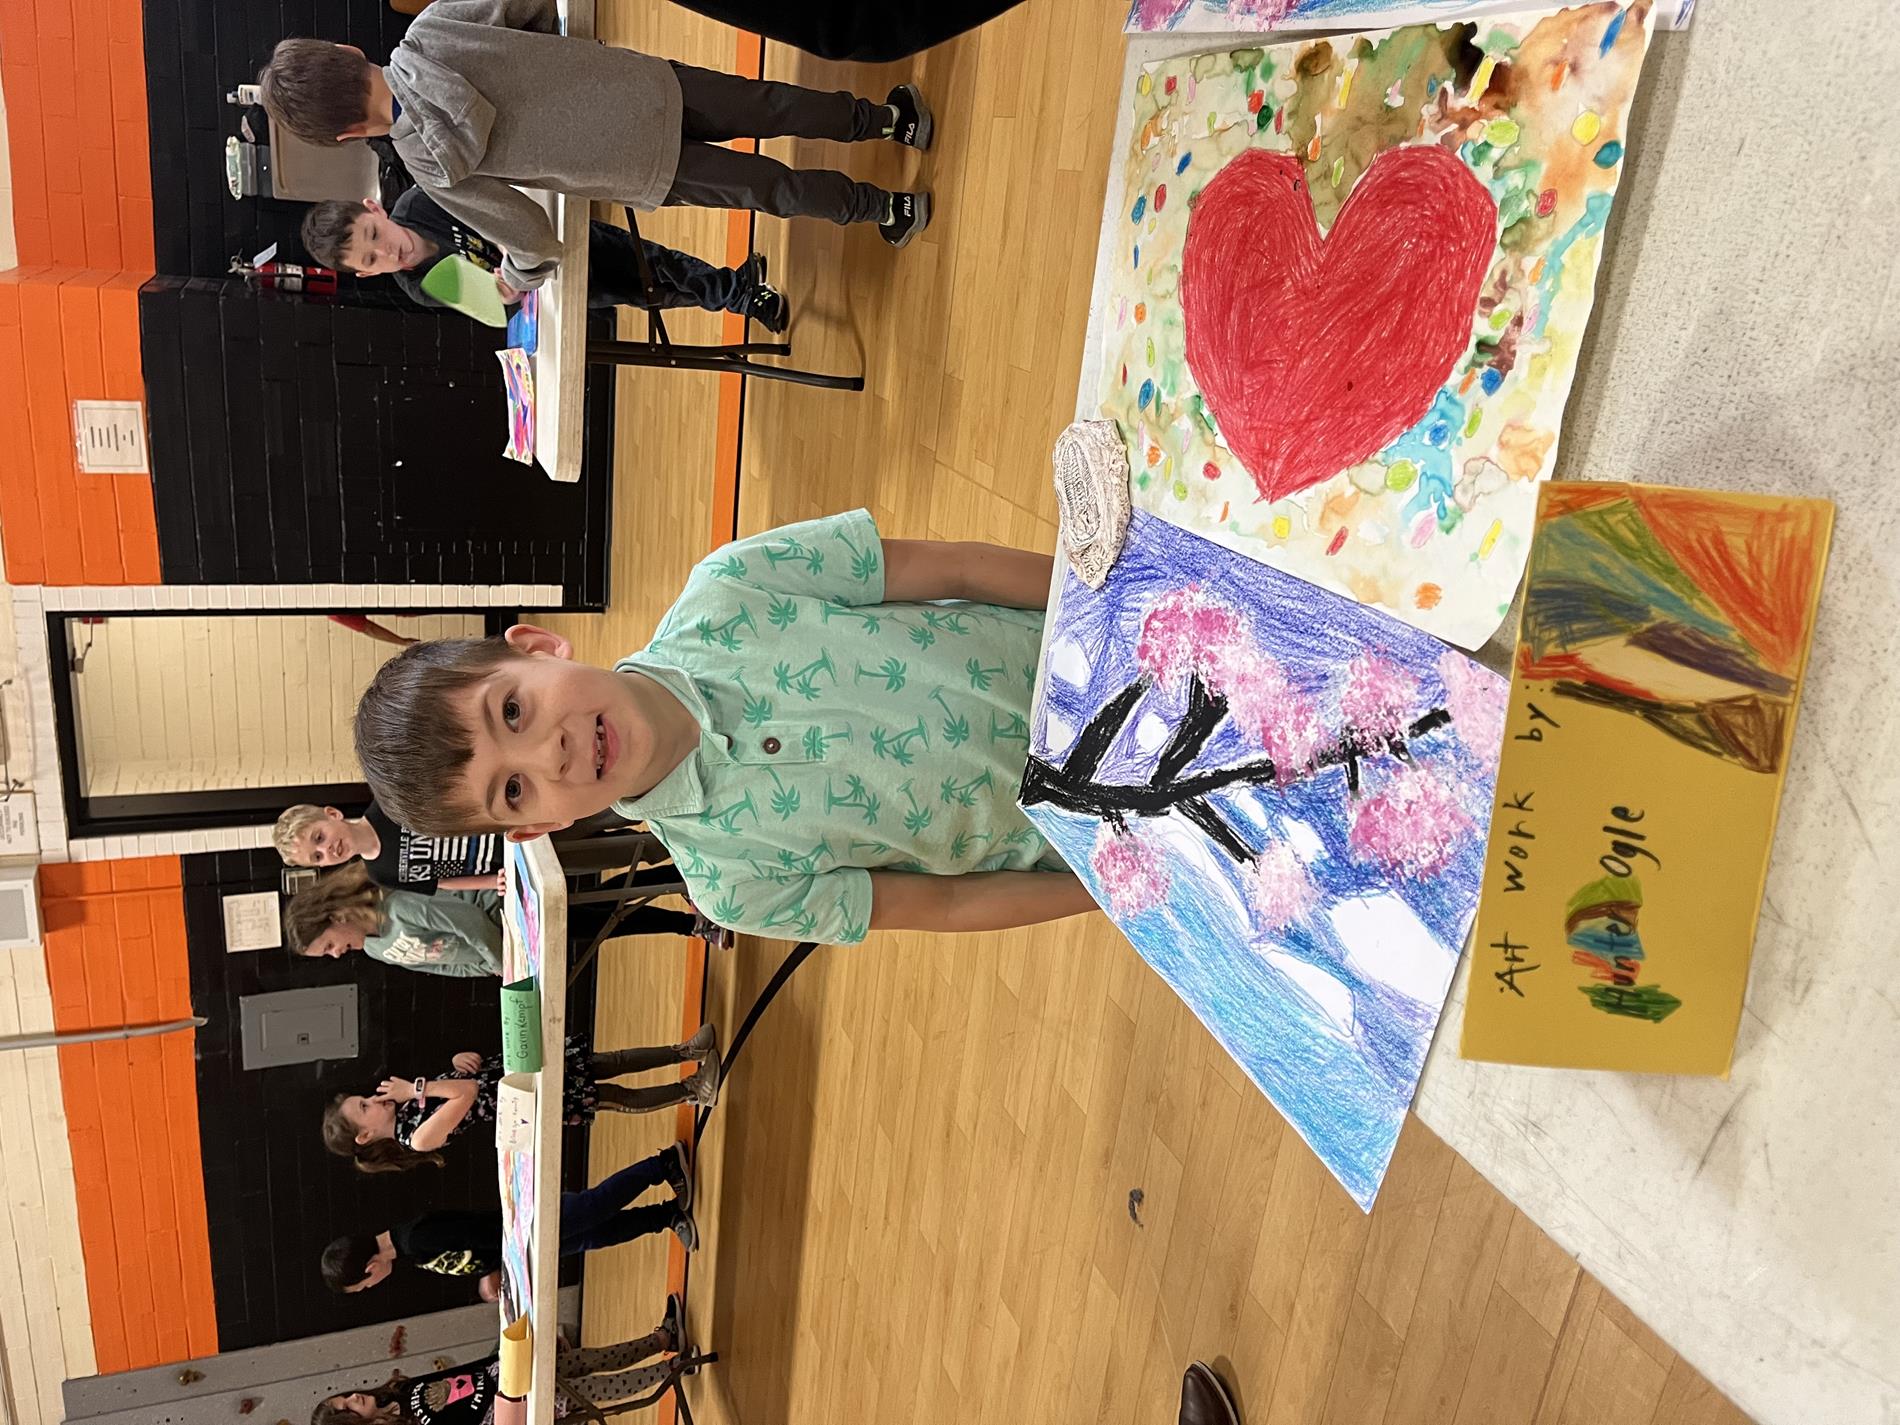 Second Grade Art Fair